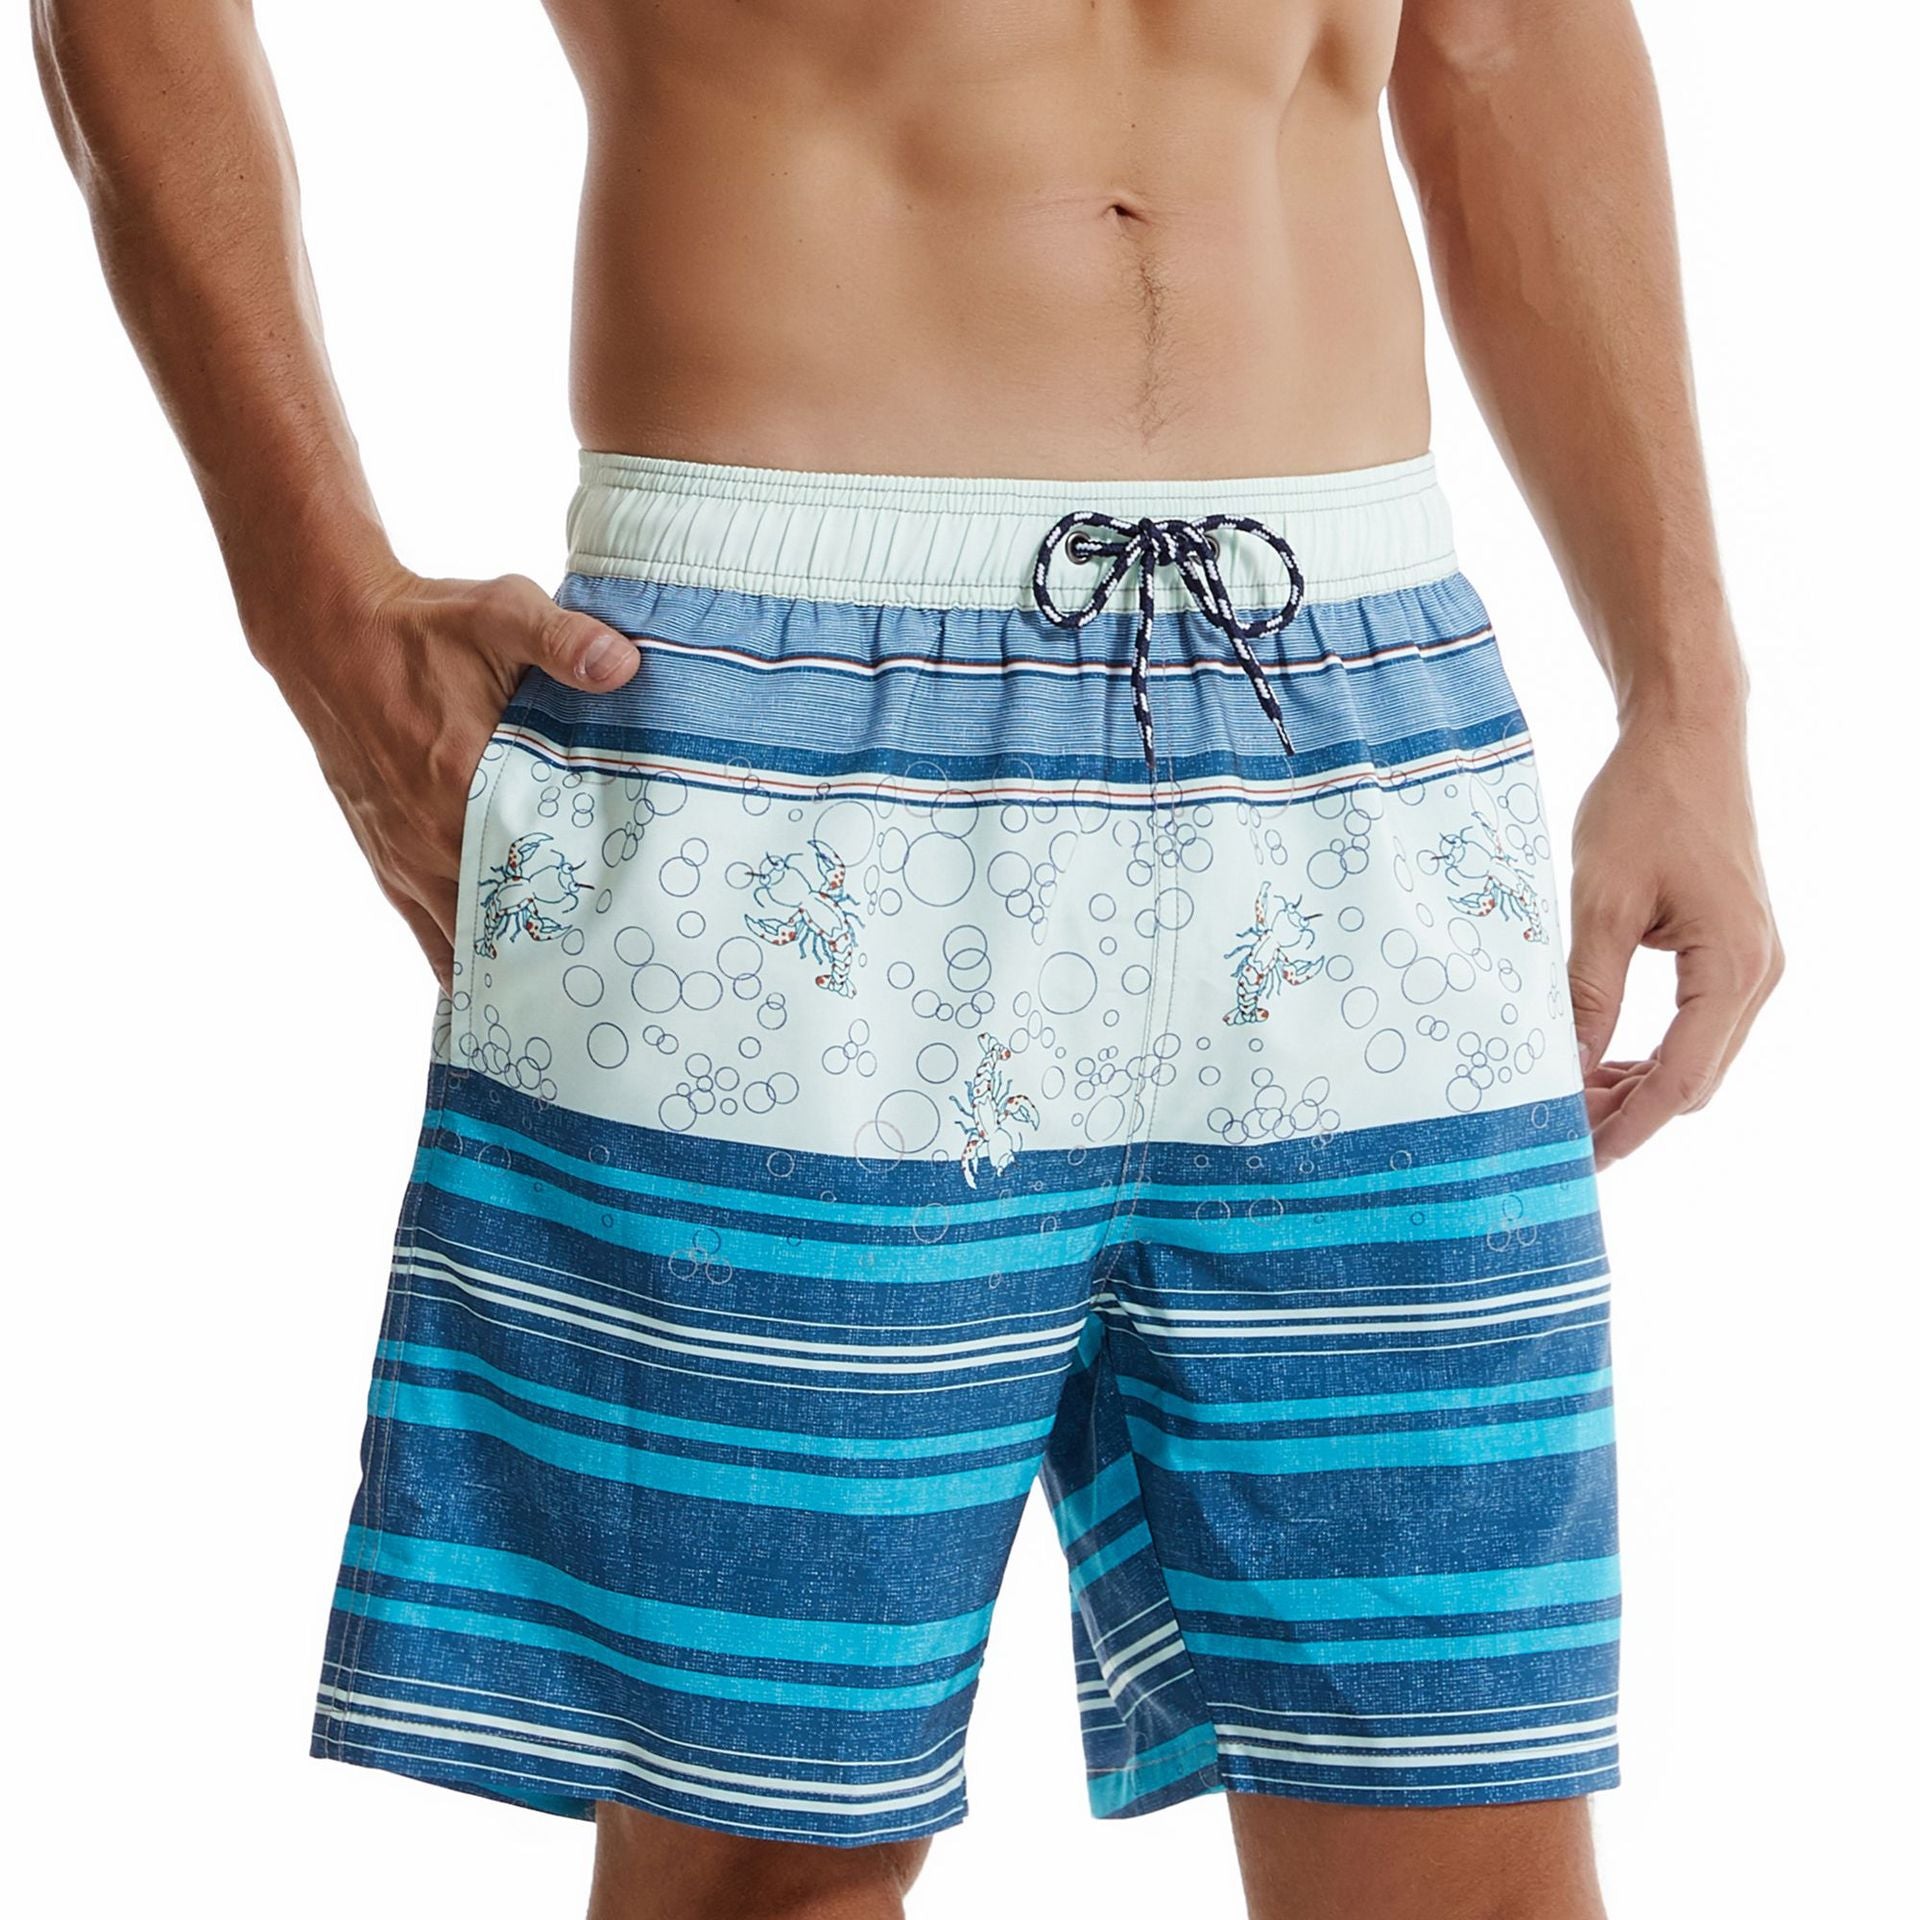 Men's Swim Trunks with Compression Liner Quick Dry 7" Inseam Swimsuit Swimwear - Crayfish Stripe